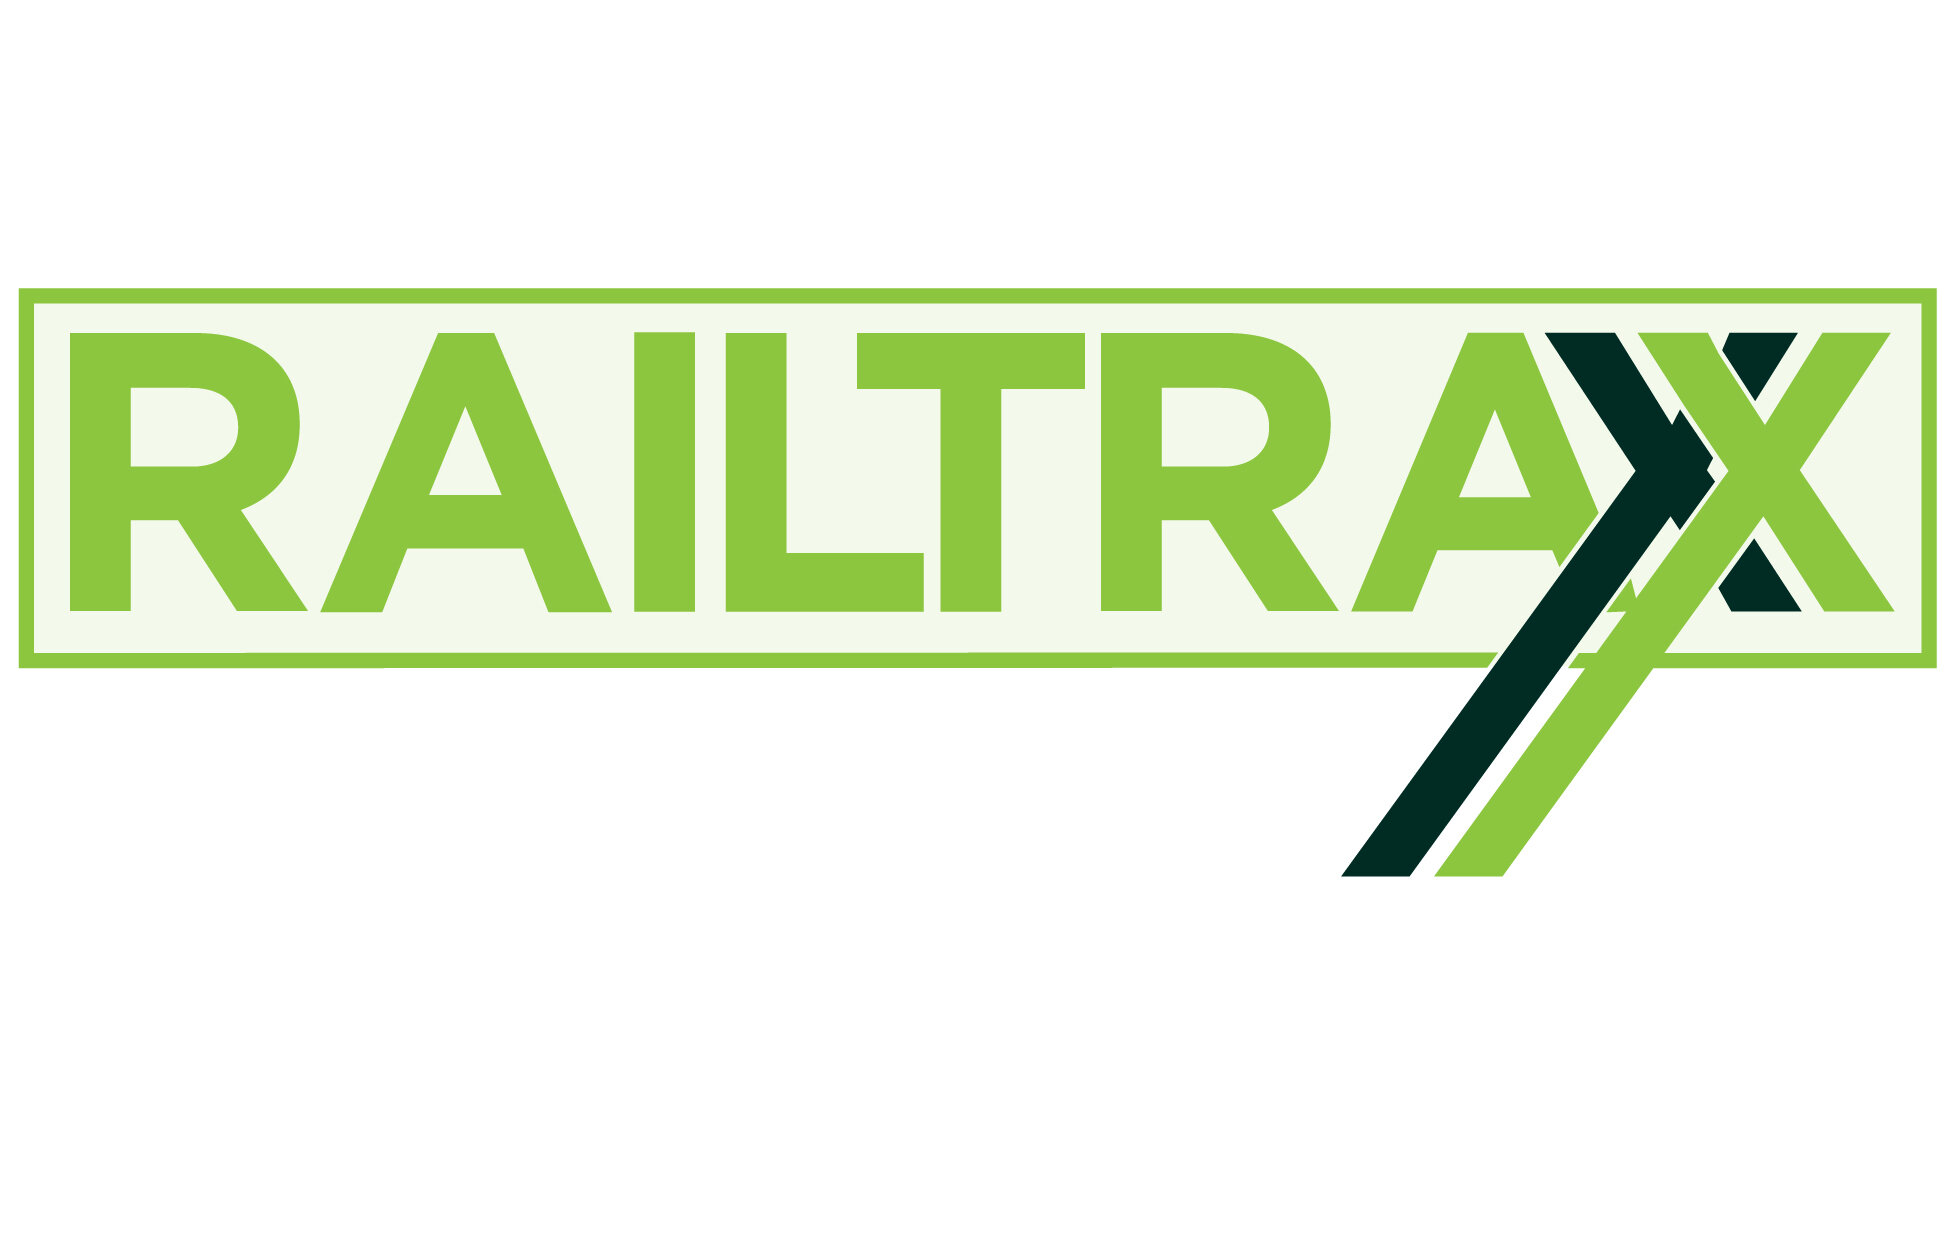 Railtraxx logo - vector (003).jpg